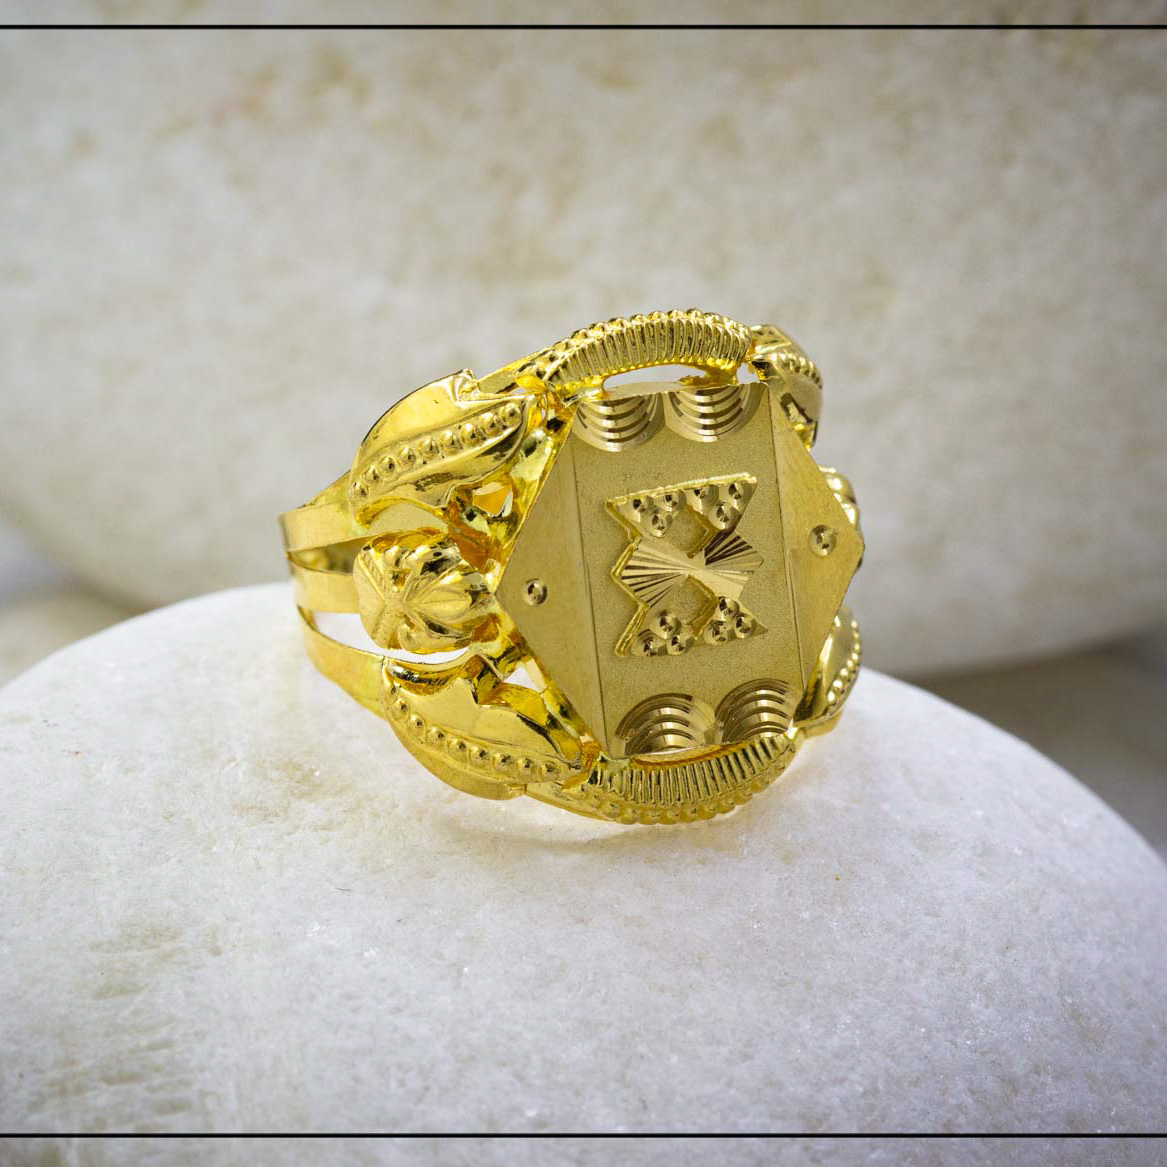 Custom gold-plated rings with emerald / tourmaline stone - Picture of New  Maharaja Gem Palace, Jaipur - Tripadvisor